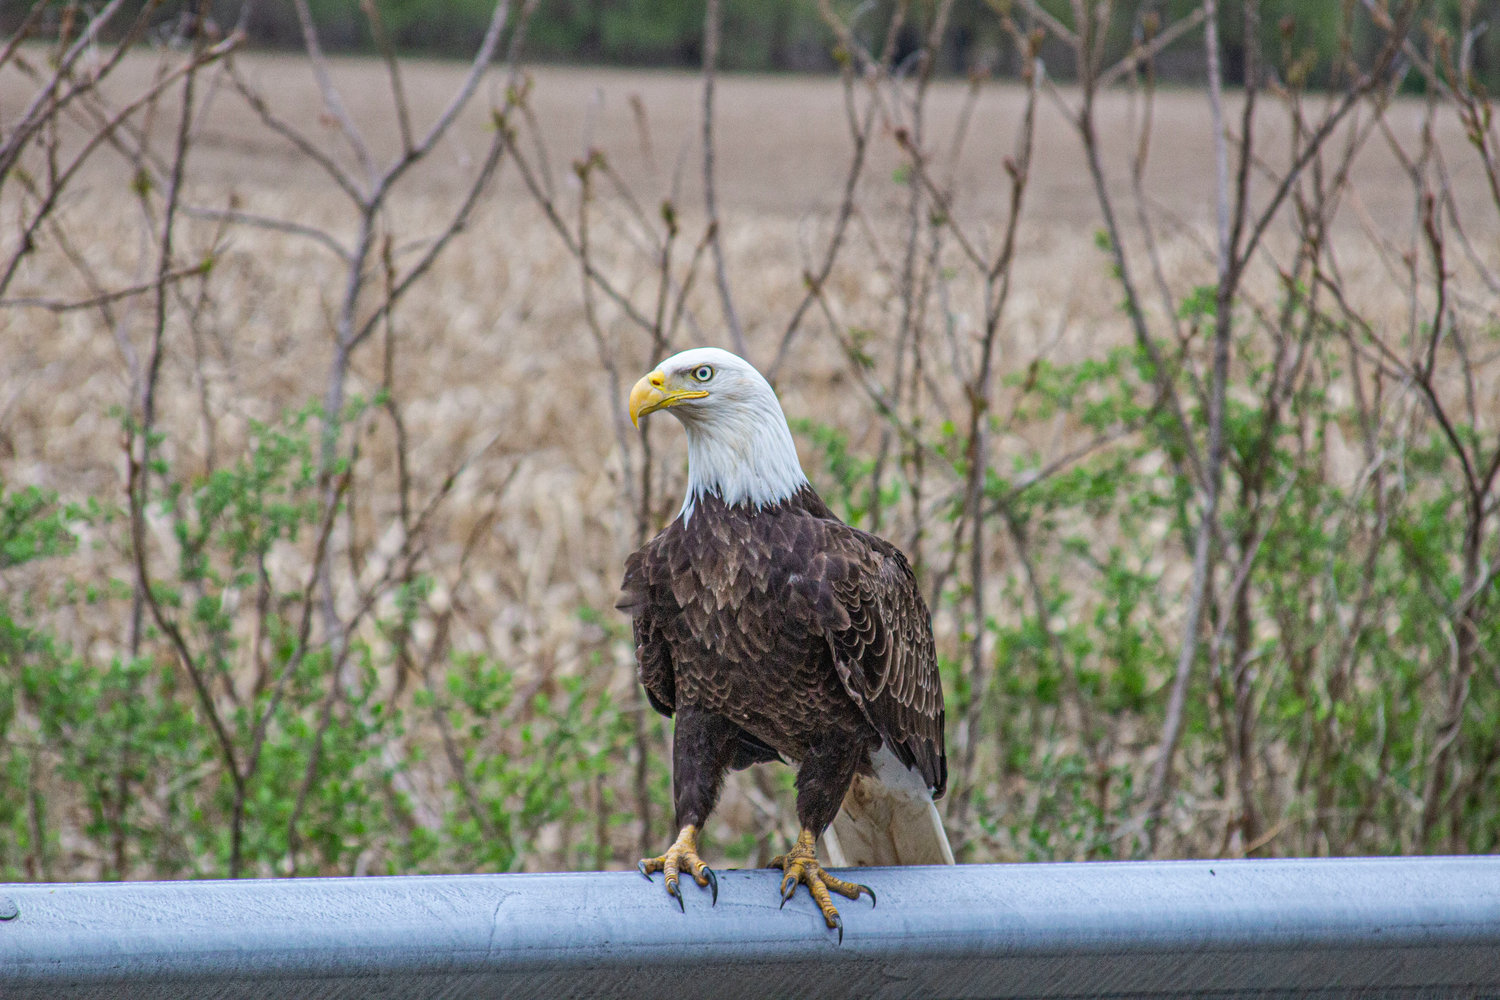 A keen eye and a good camera make finding a bald eagle a treat.